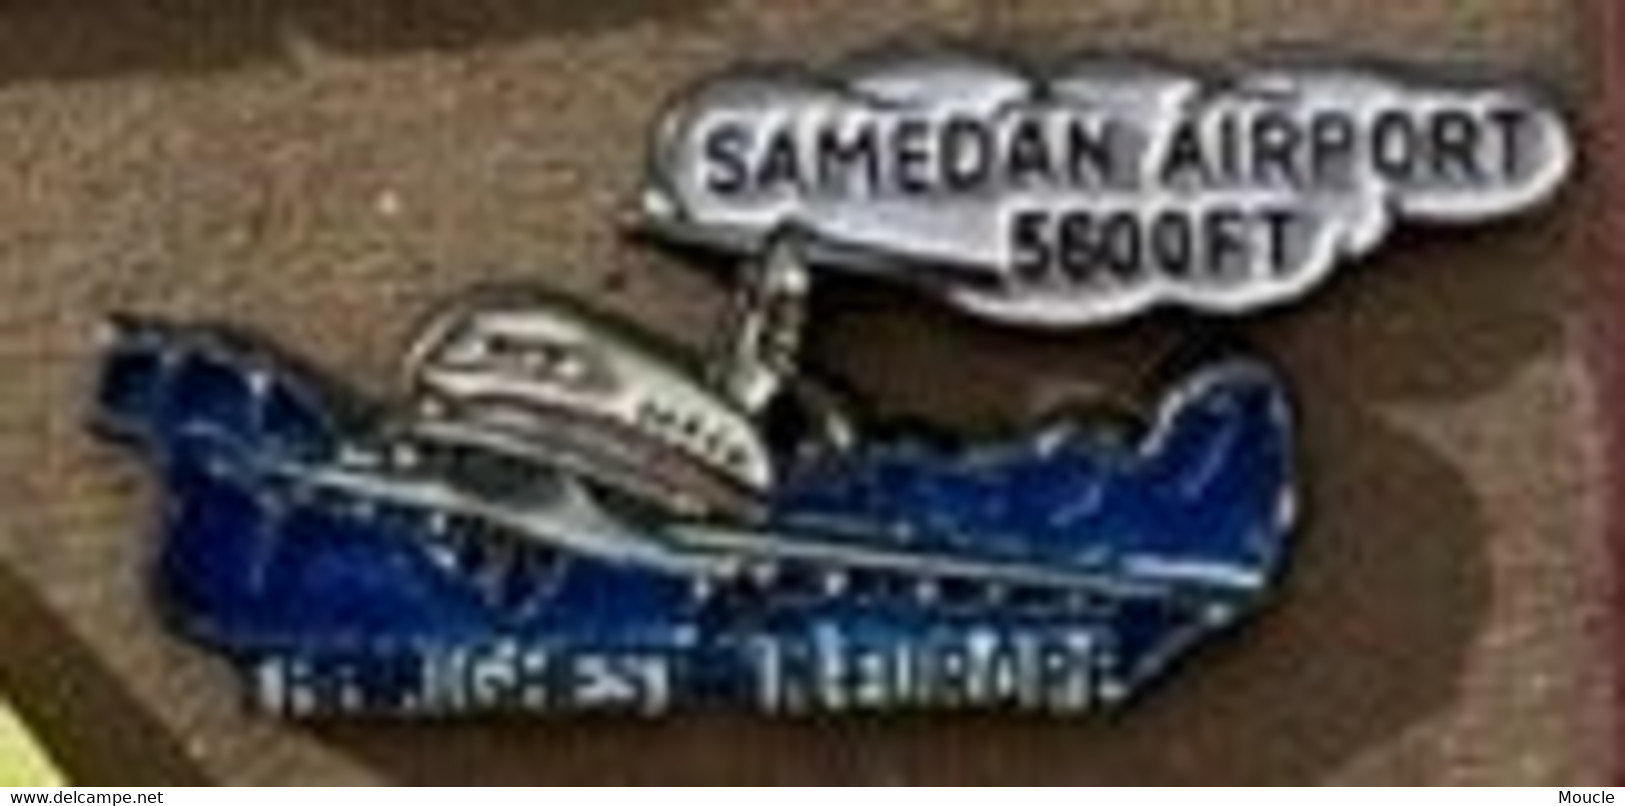 SAMEDAN AIRPORT 5600ft - THE HIGHEST IN EUROPE - PLANE - AVION - FOND BLEU - FLUGZEUG - AEREO-     (24) - Avions